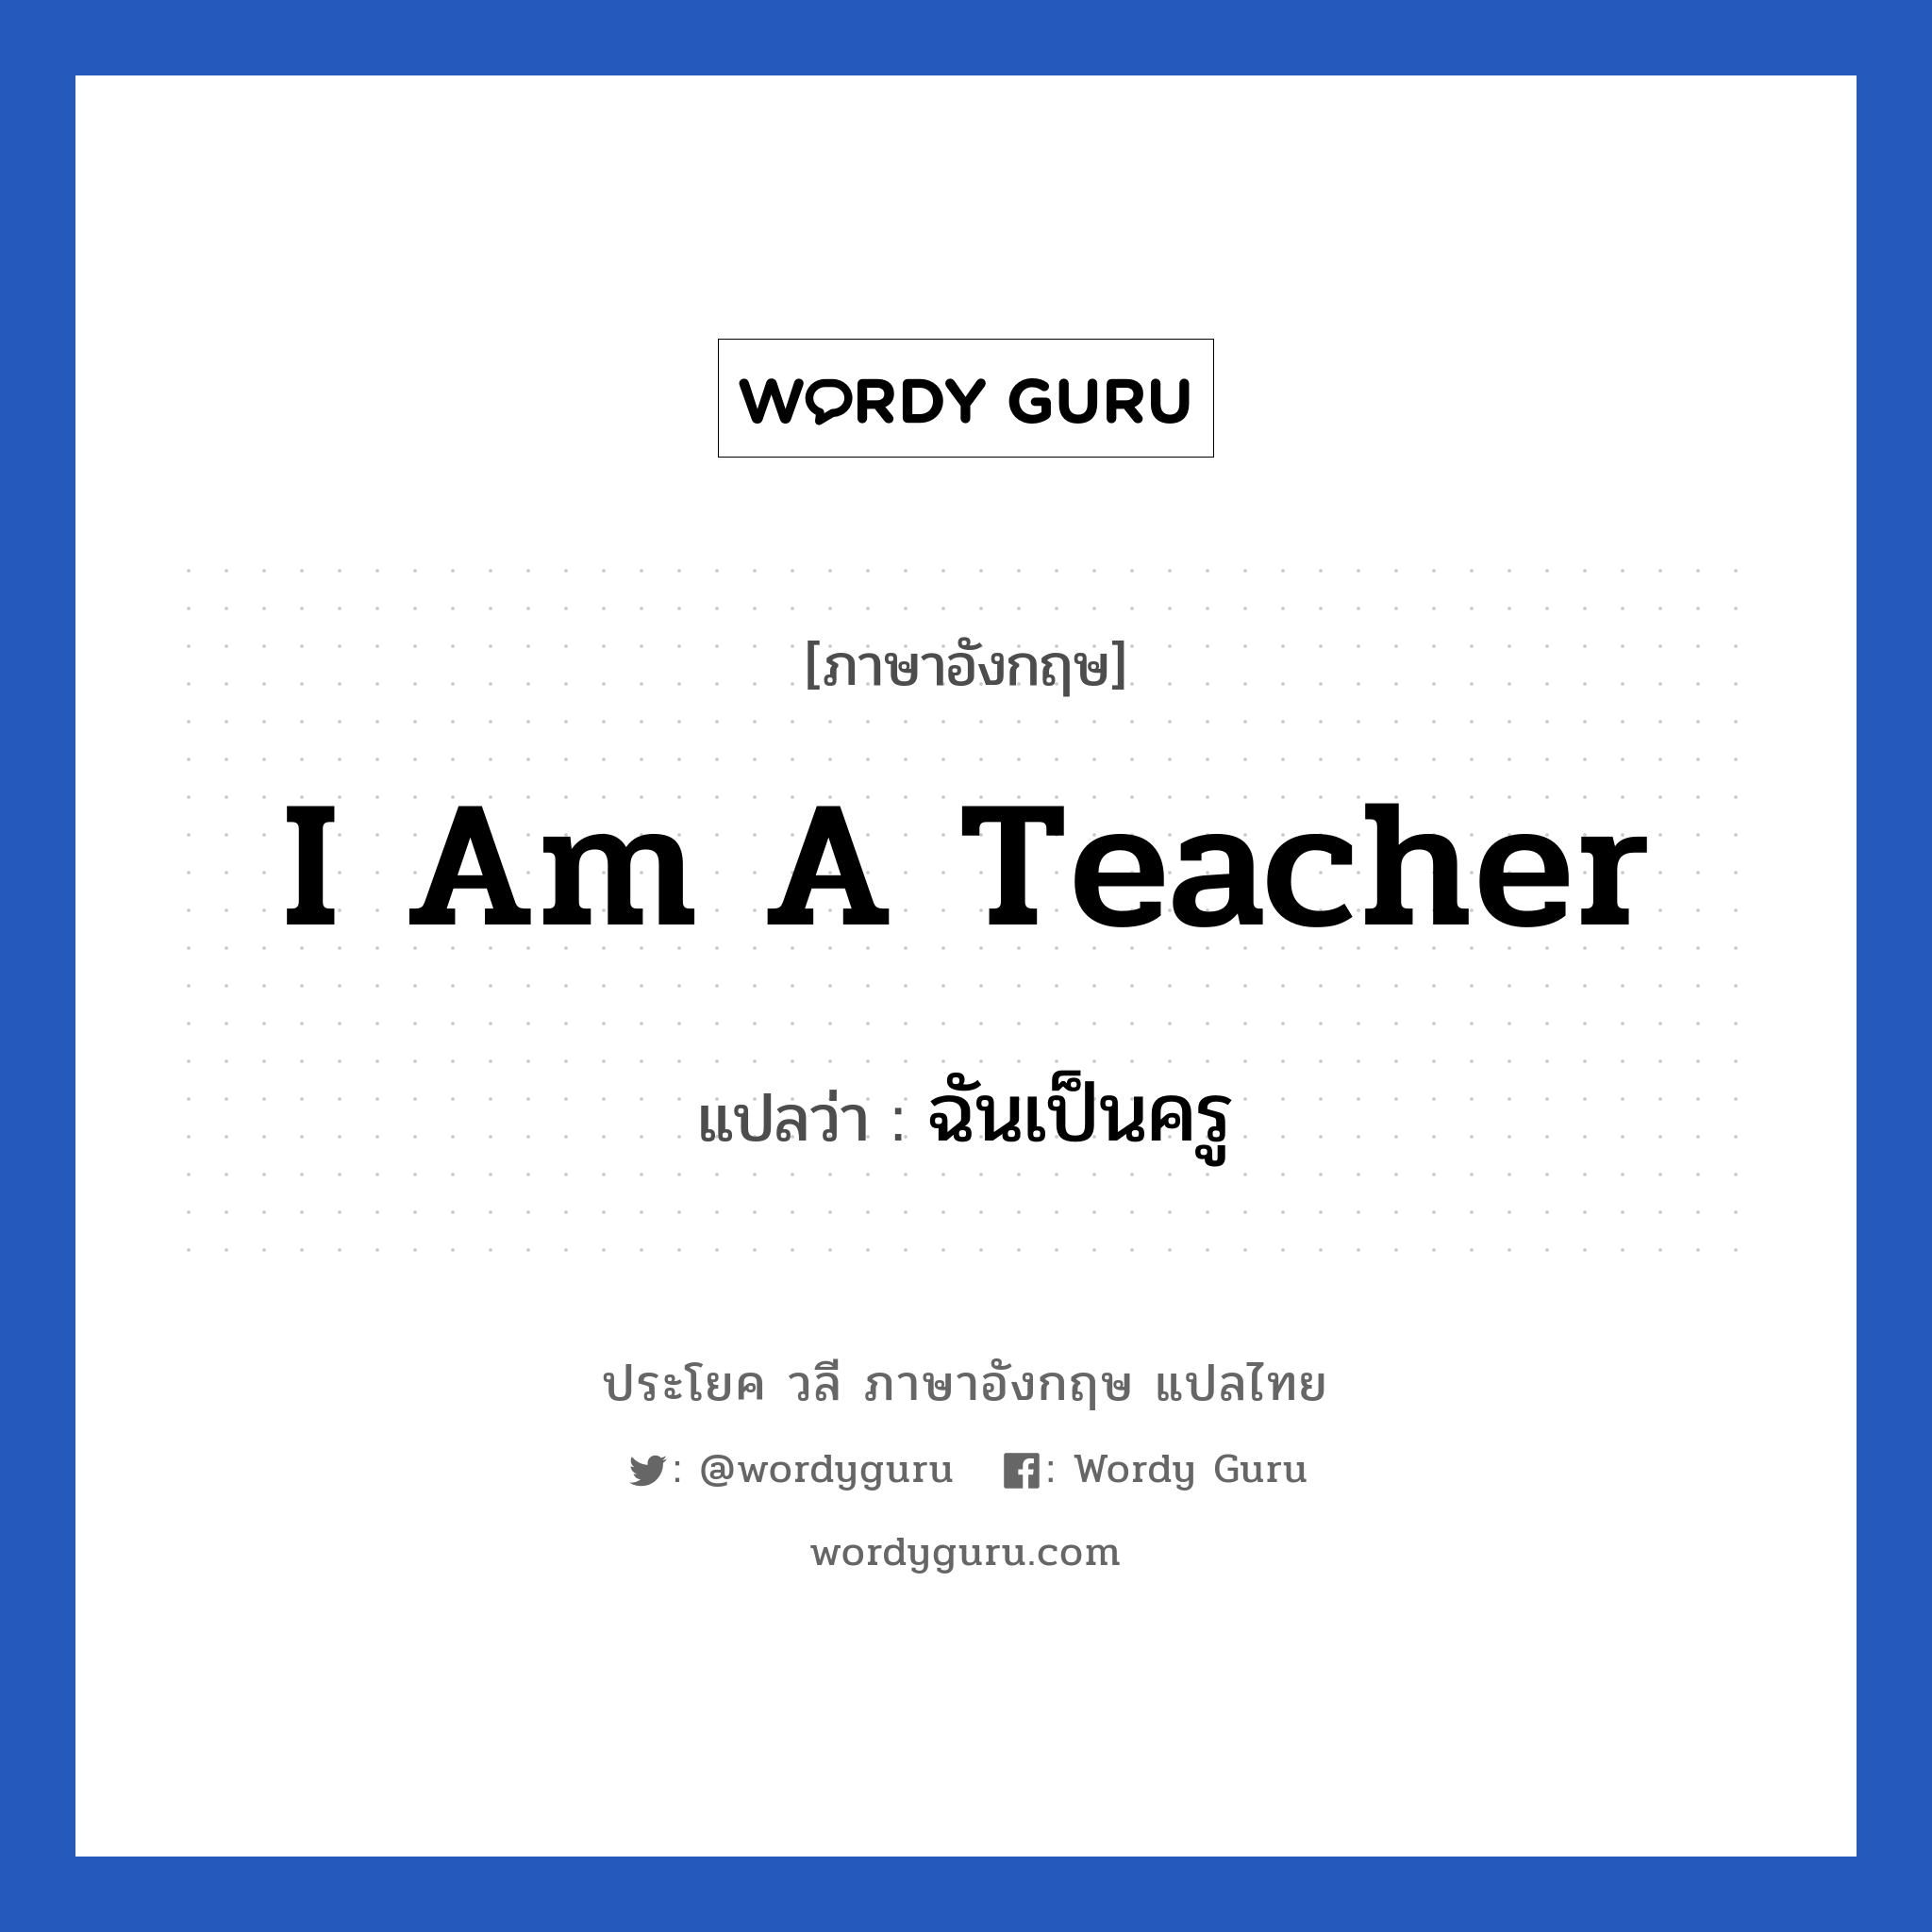 I am a teacher แปลว่า?, วลีภาษาอังกฤษ I am a teacher แปลว่า ฉันเป็นครู